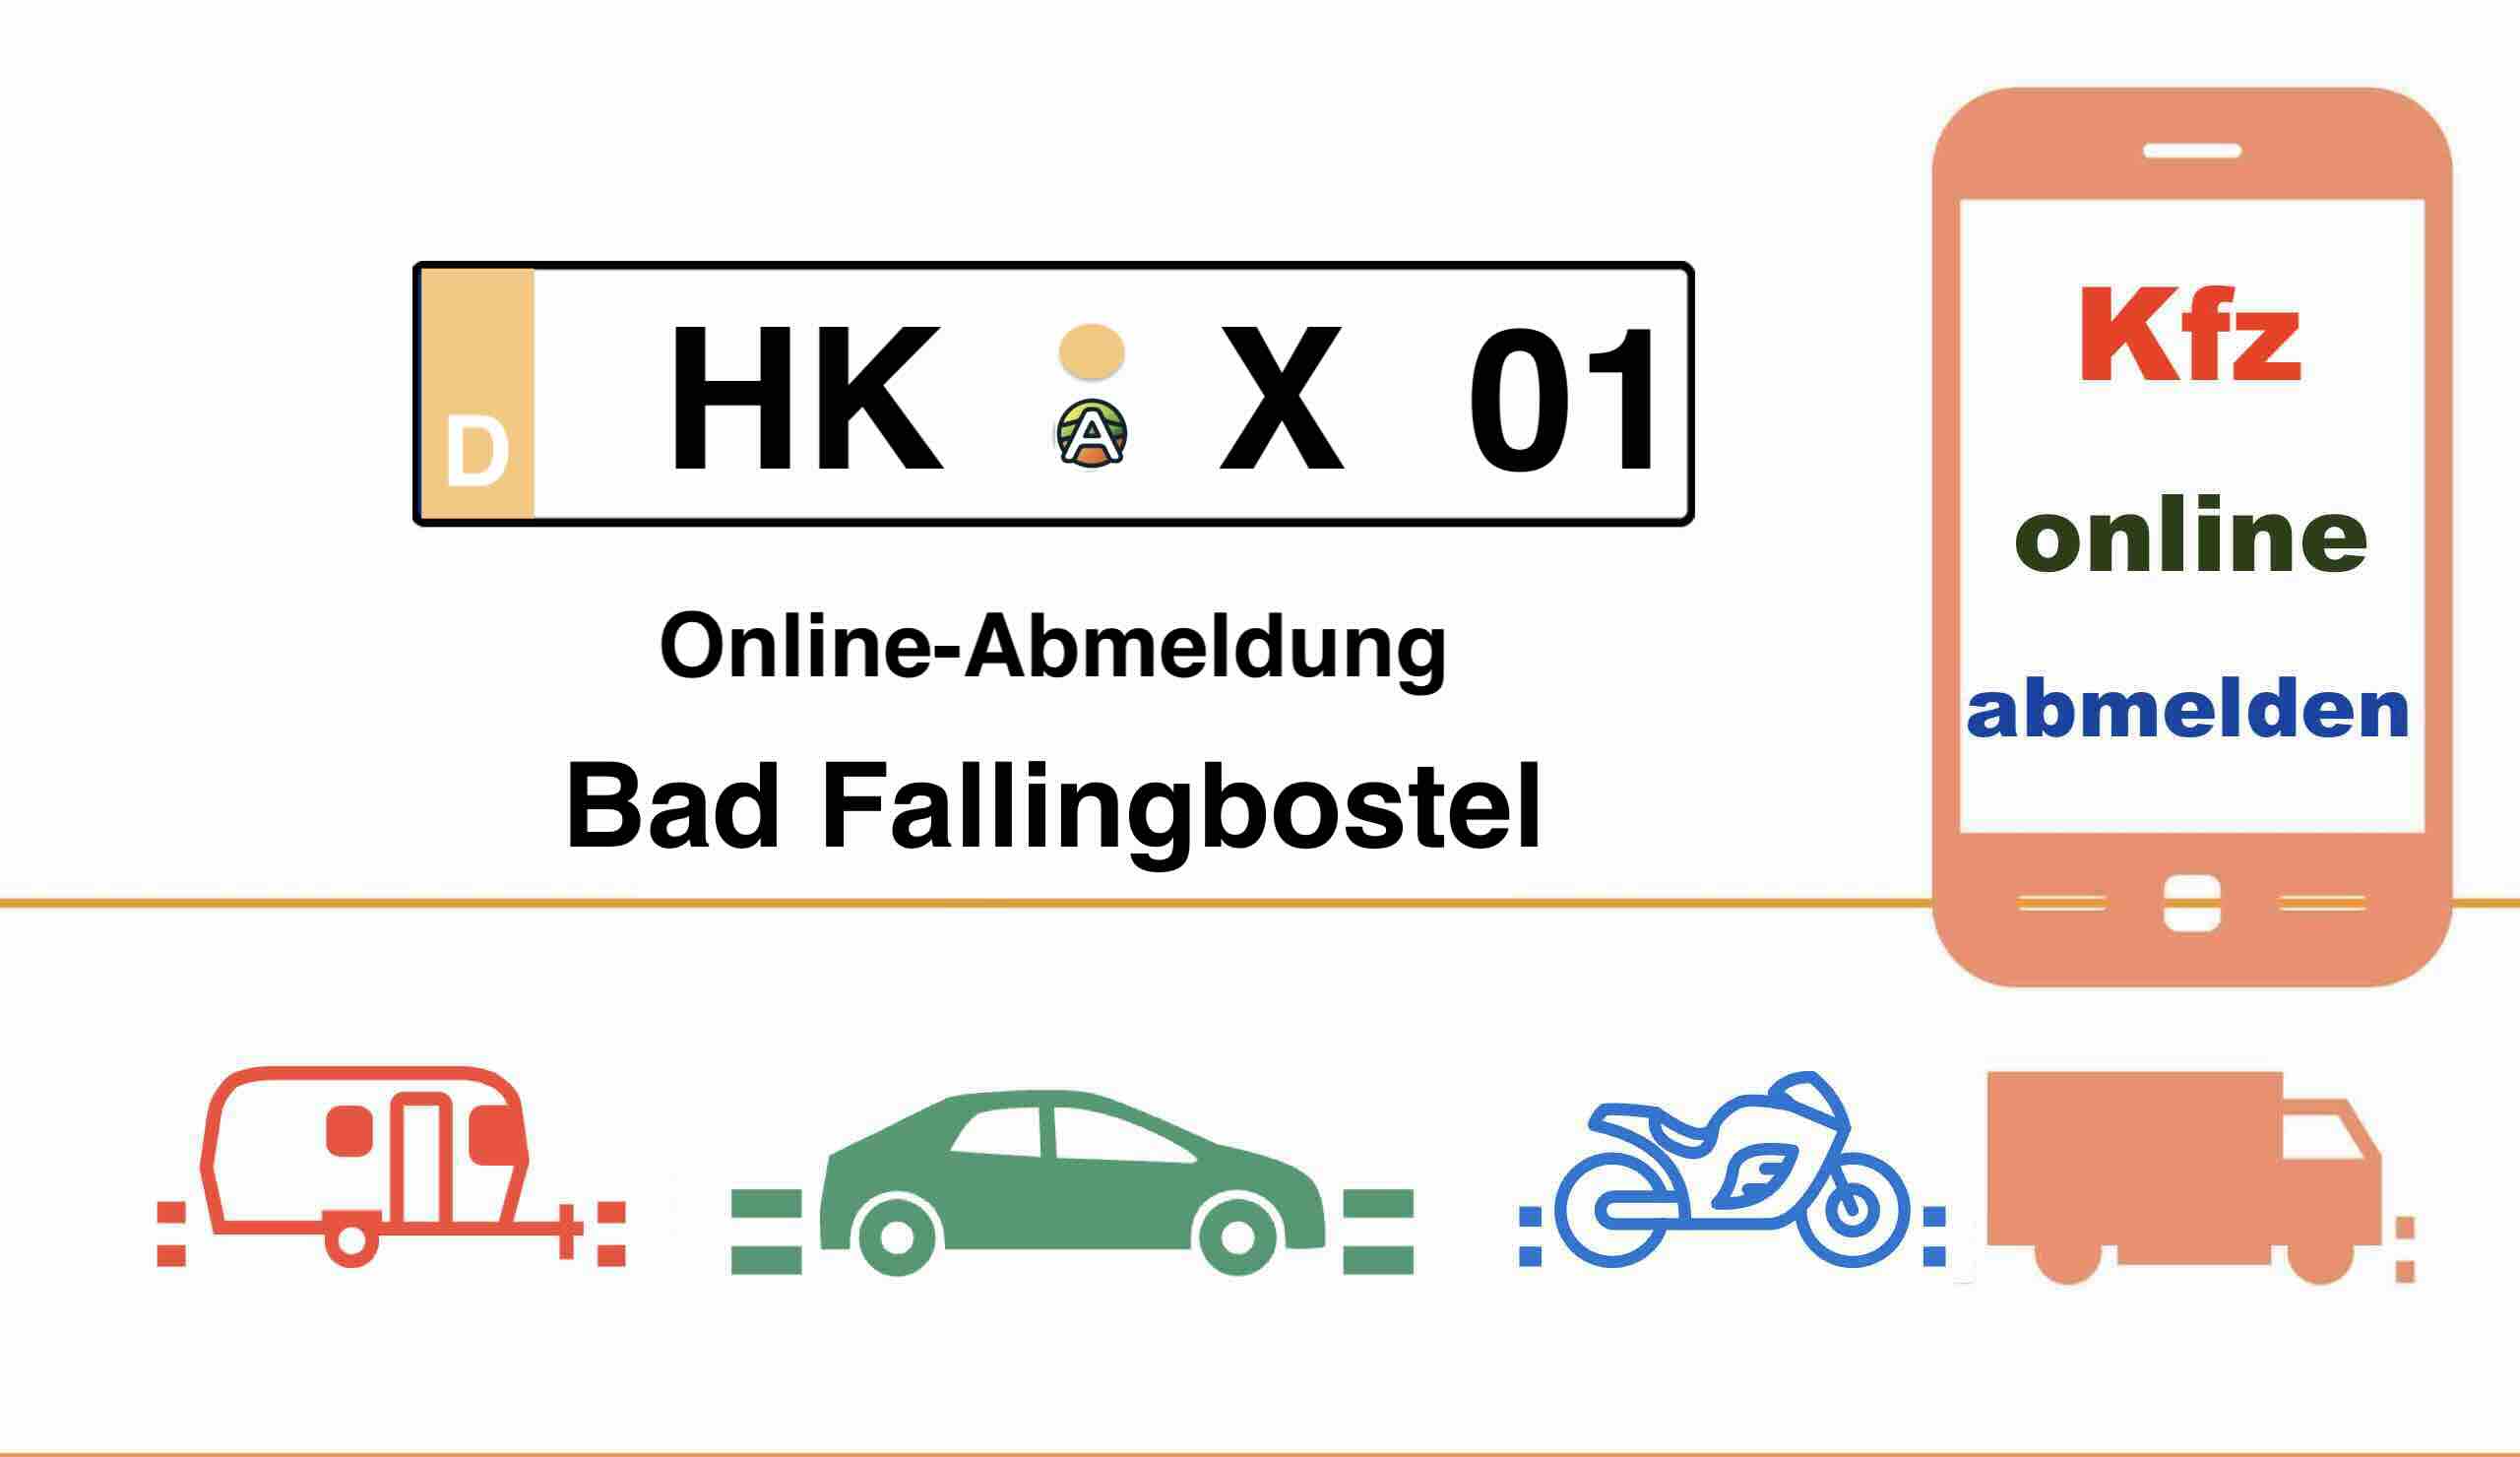 Online-Abmeldung in Bad Fallingbostel 